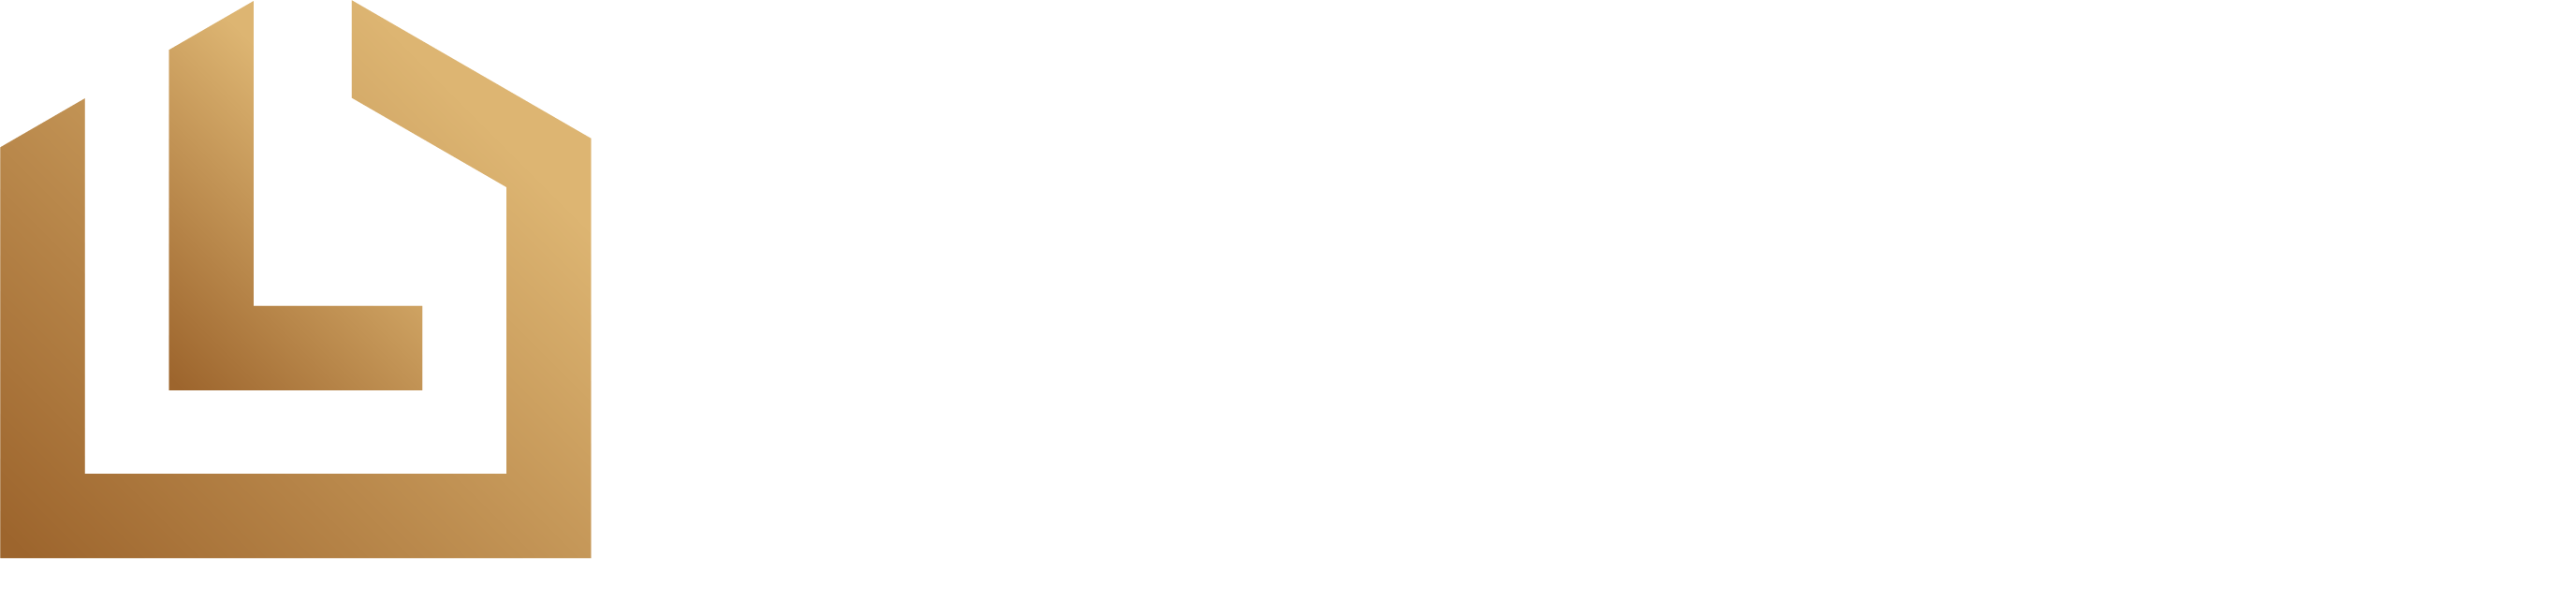 Lorenz Property Group